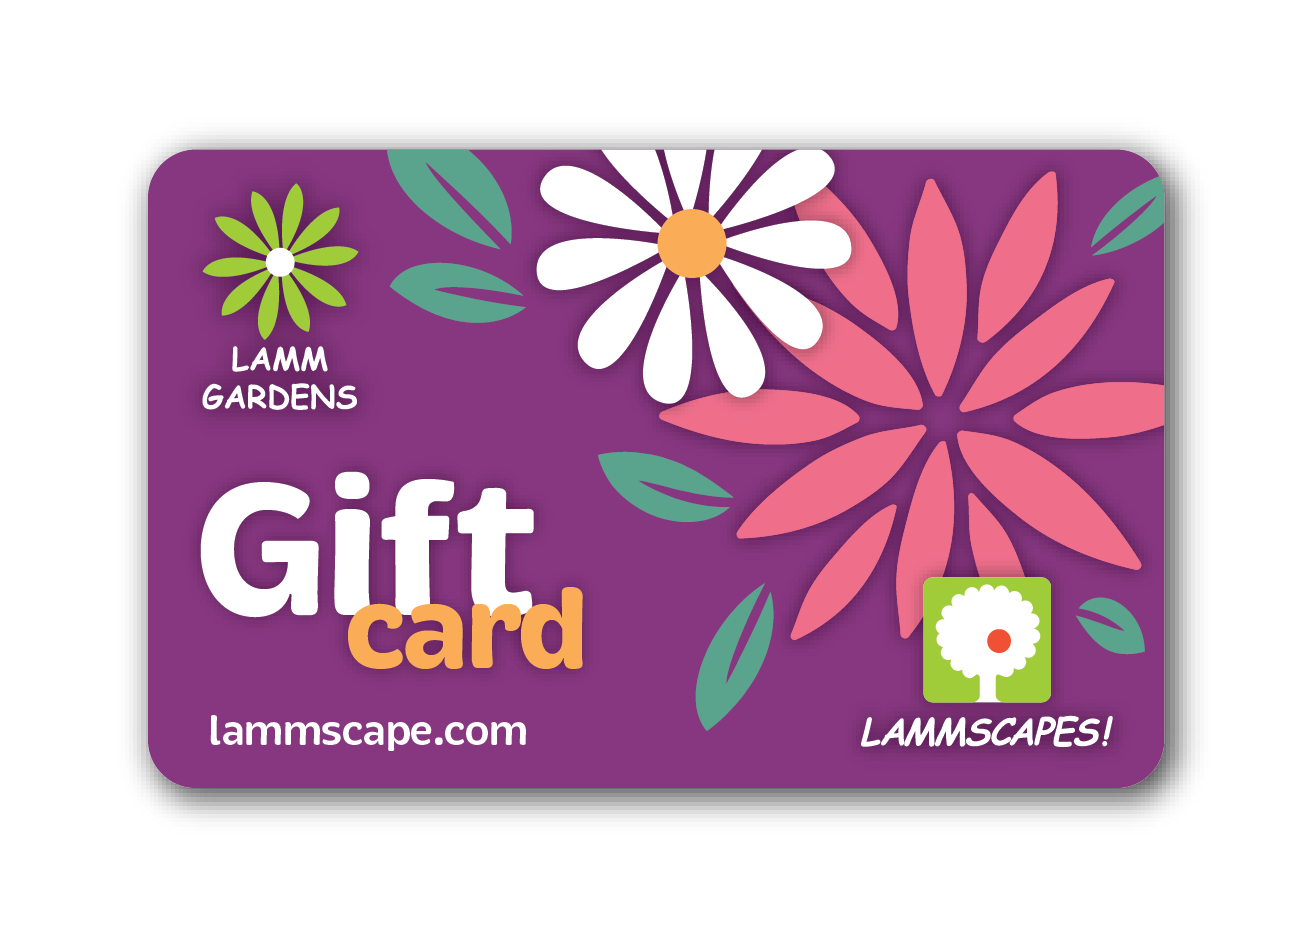 Lamm Gardens Gift Card!